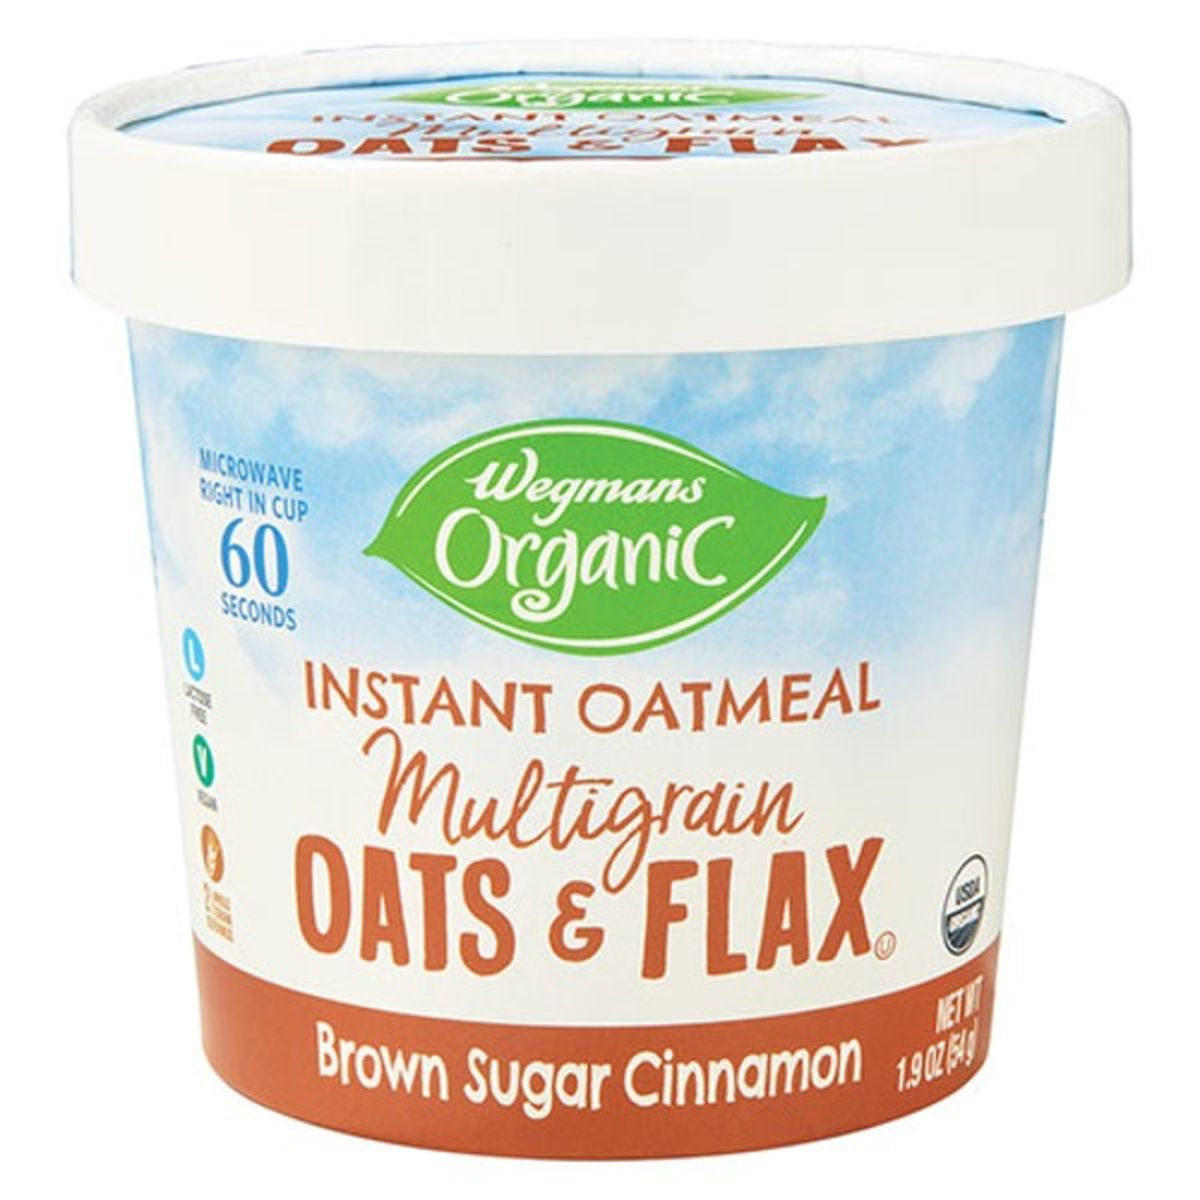 Calories in Wegmans Organic Brown Sugar Cinnamon Oats & Flax Instant Oatmeal